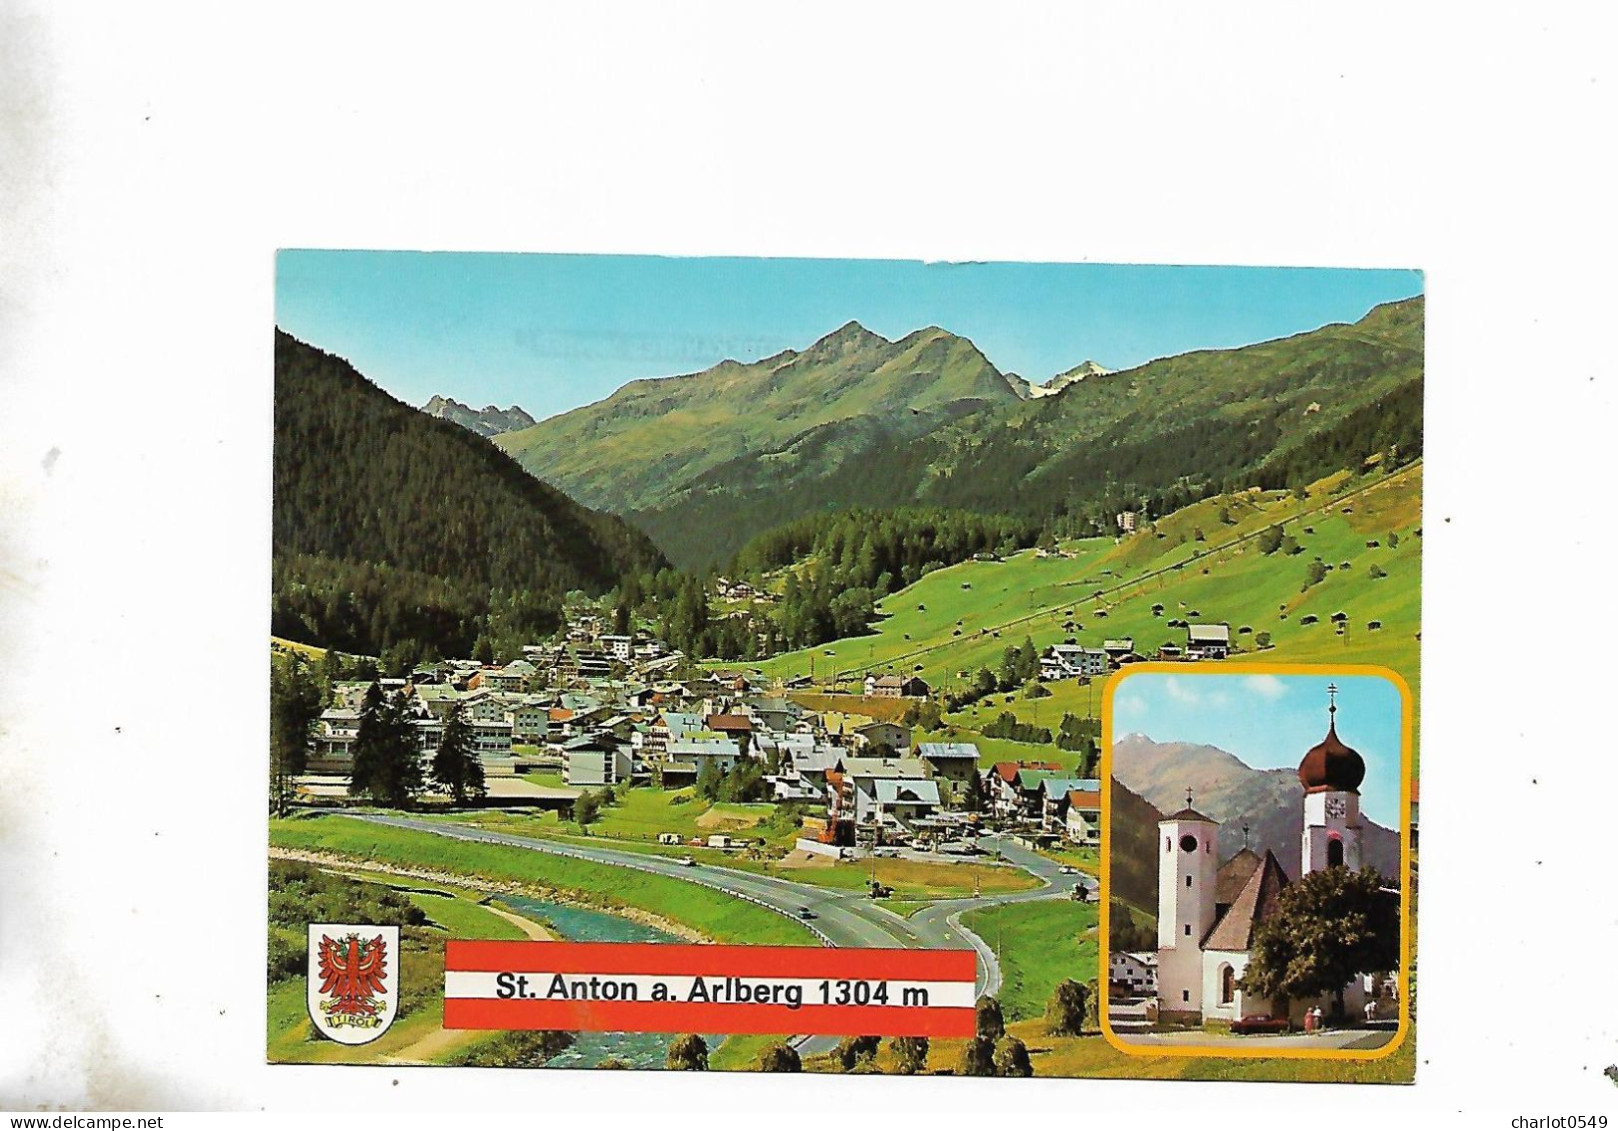 1304m - St. Anton Am Arlberg